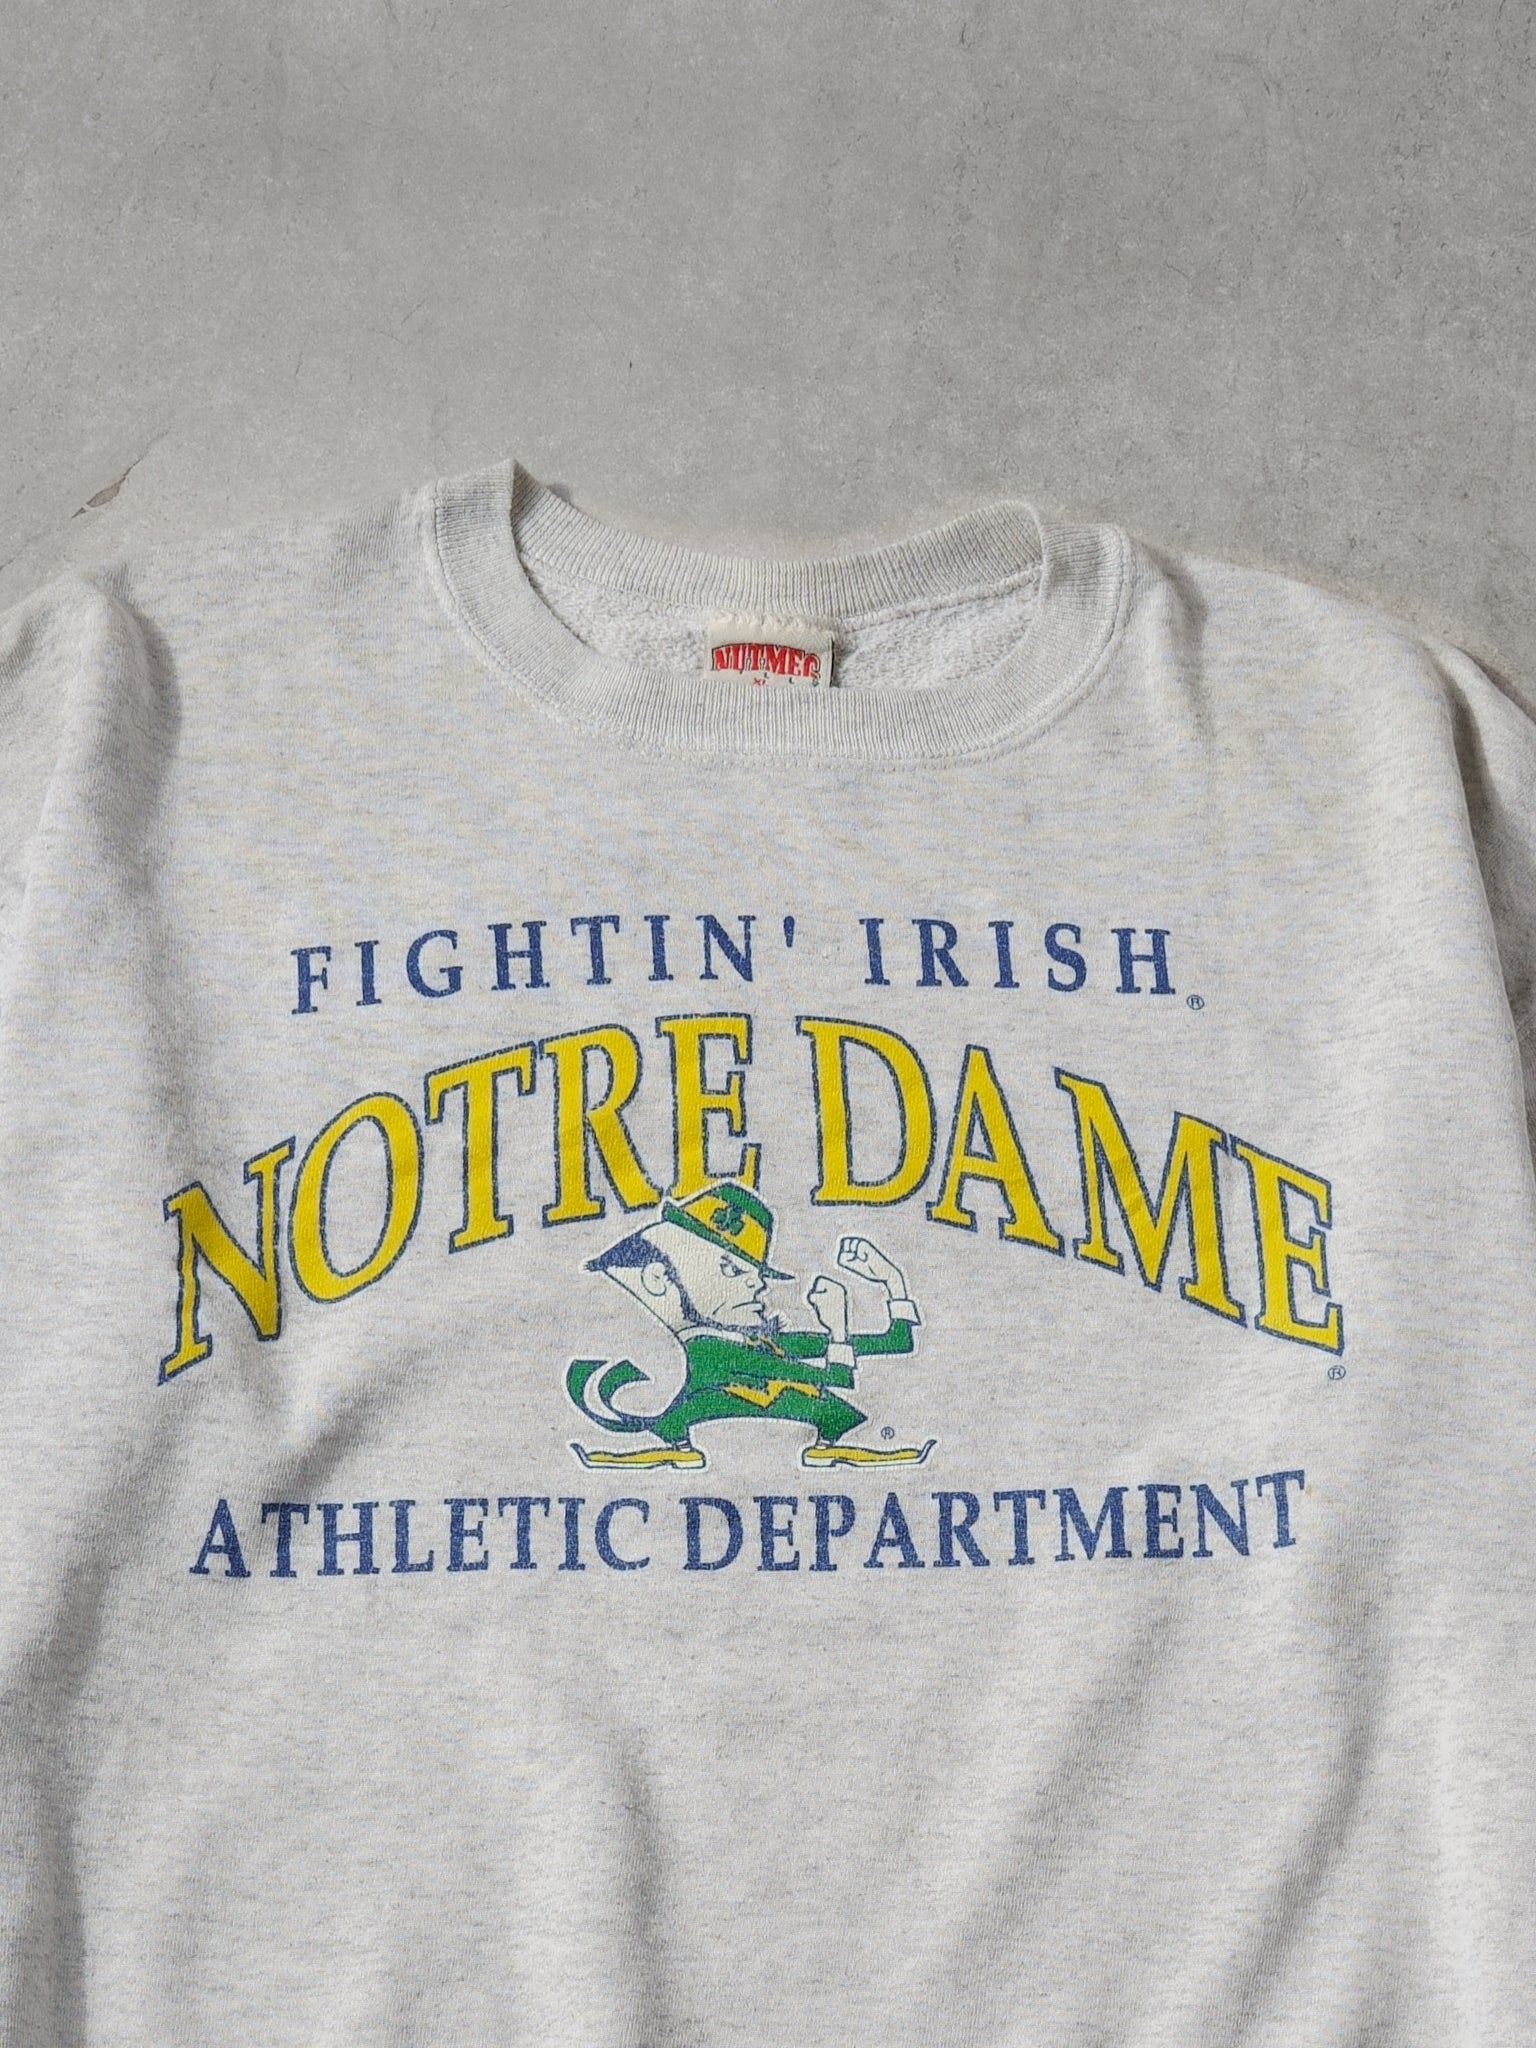 Vintage 90s Grey and Blue Notre Dame Fighting Irish Athletics Dept Crewneck (XL)